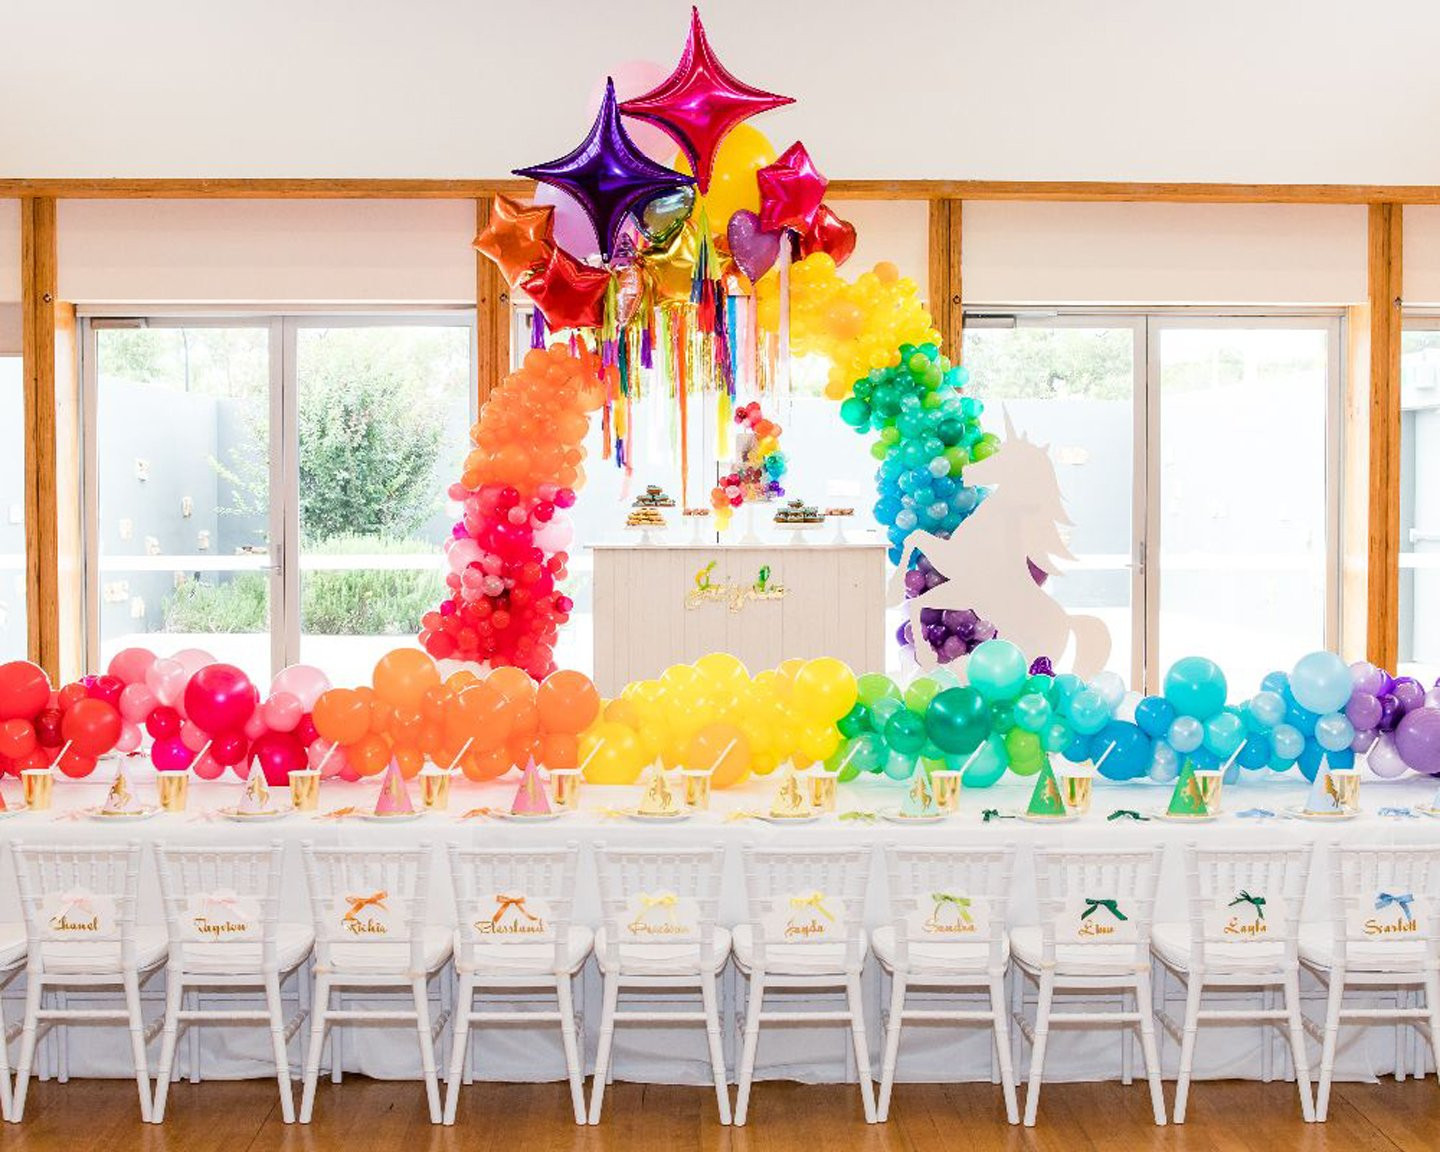 Unicorn Party Table Ideas
 LAVISH RAINBOW UNICORN PARTY – KIDS PARTY IDEAS – We Came